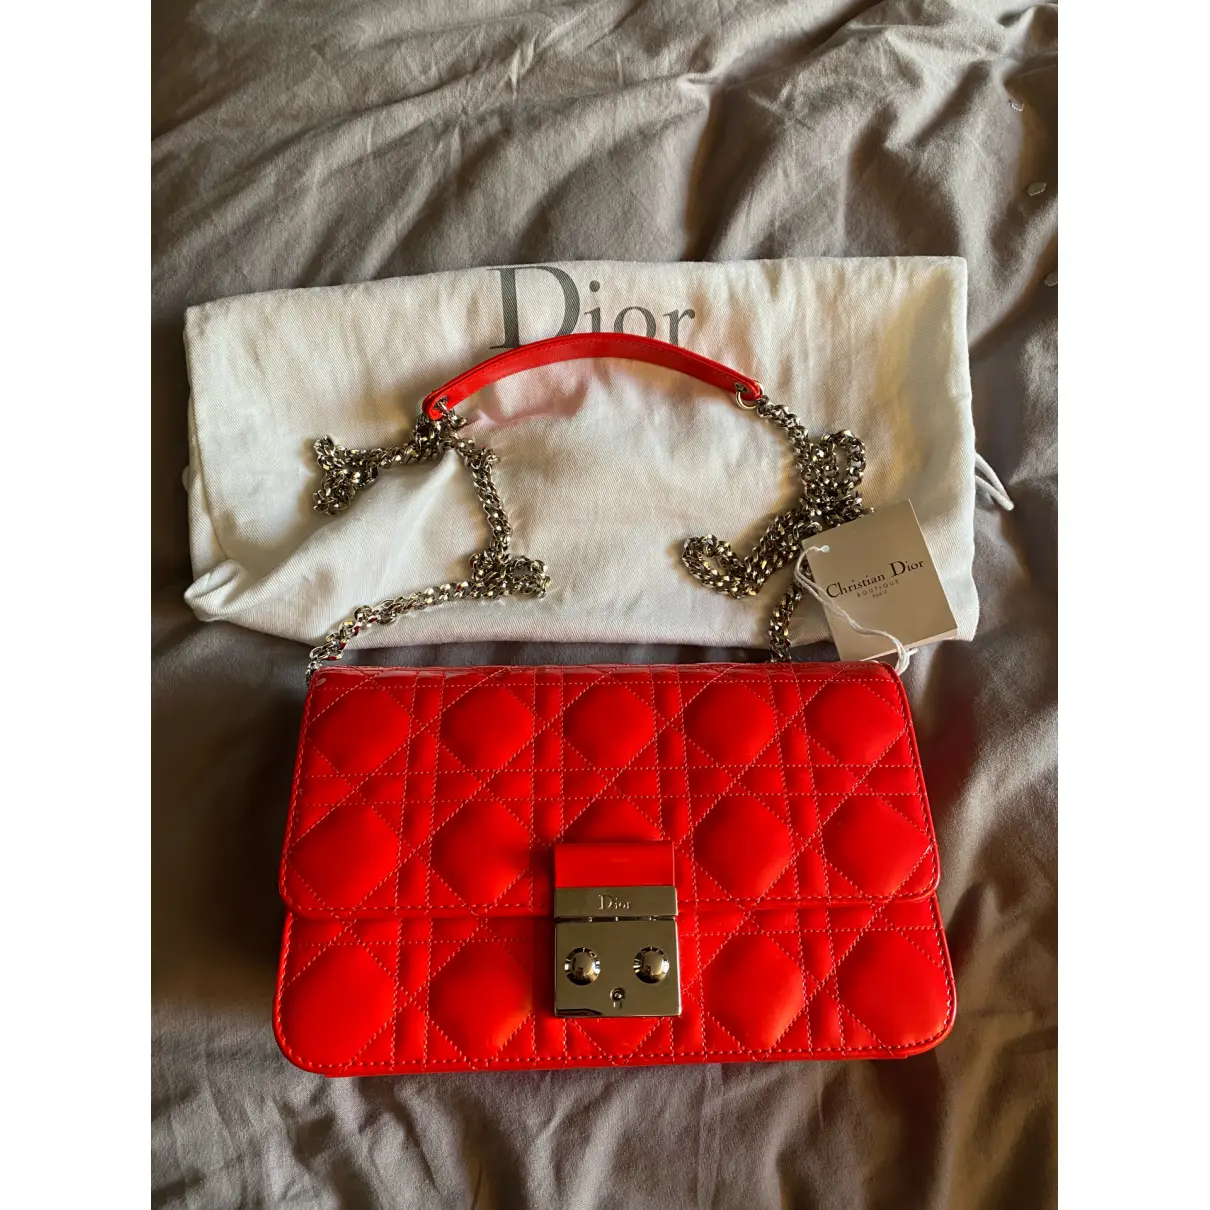 Buy Dior Miss Dior Promenade patent leather crossbody bag online